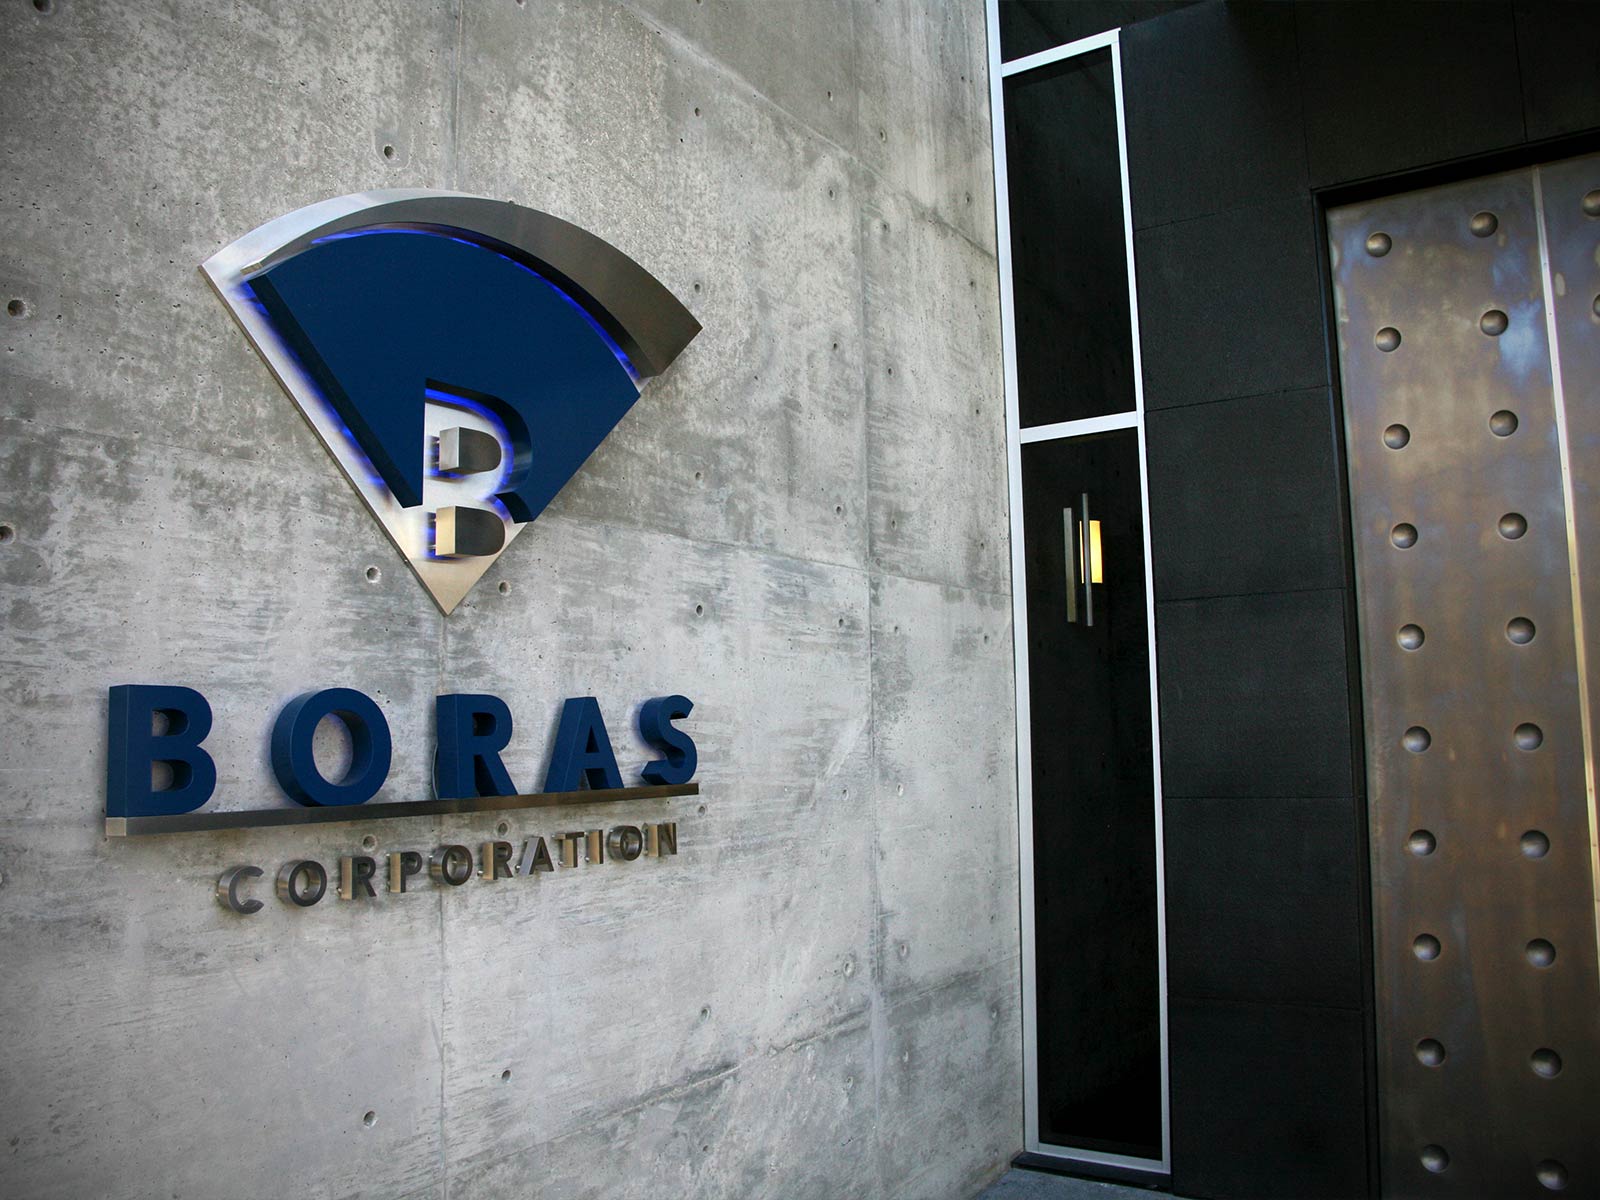 Boras Corporation Branding and Identity